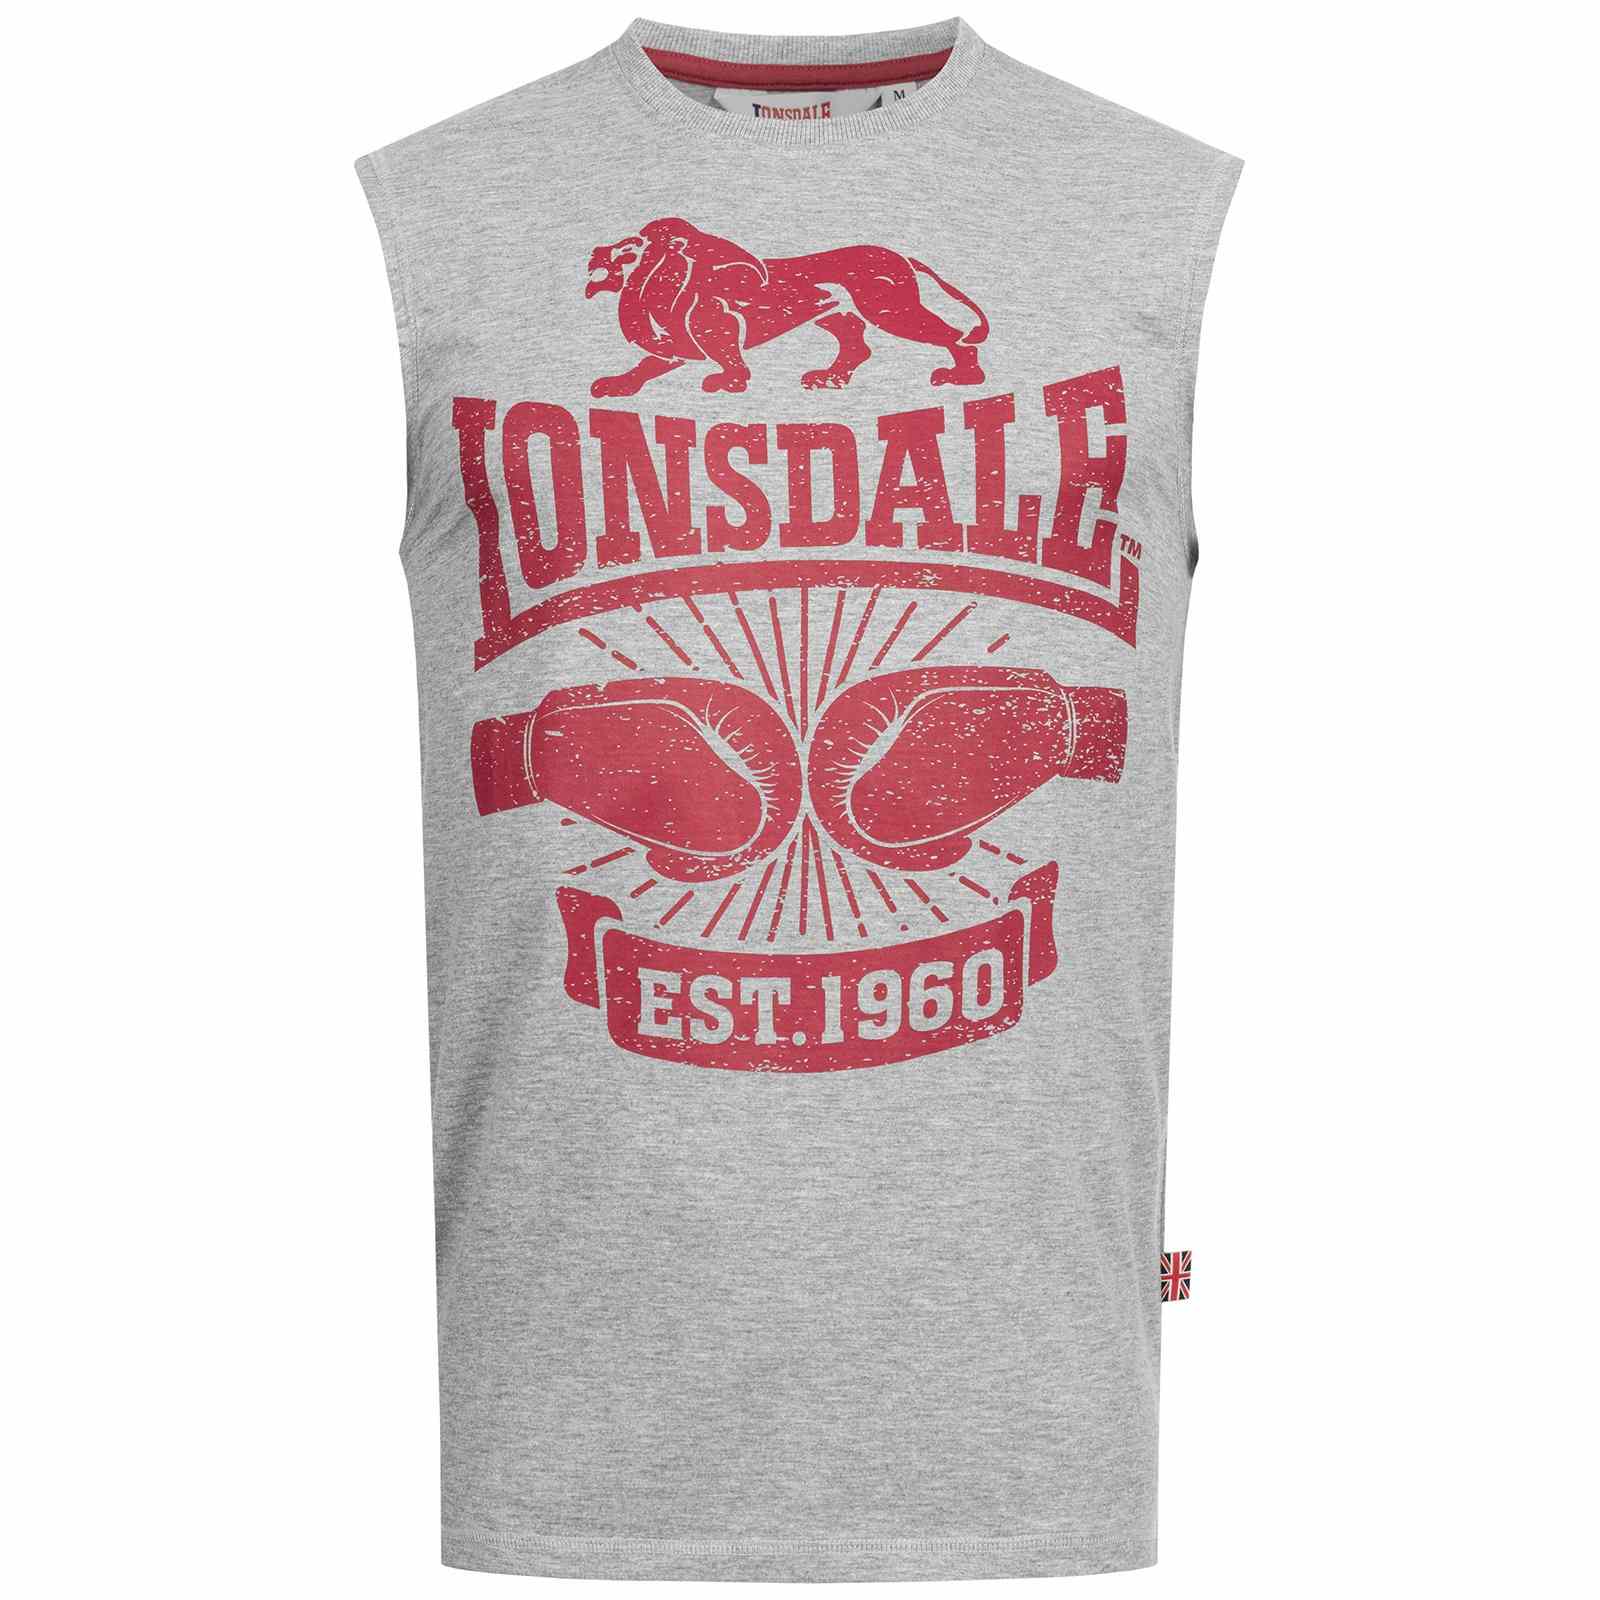 Lonsdale Men's sleeveless t-shirt